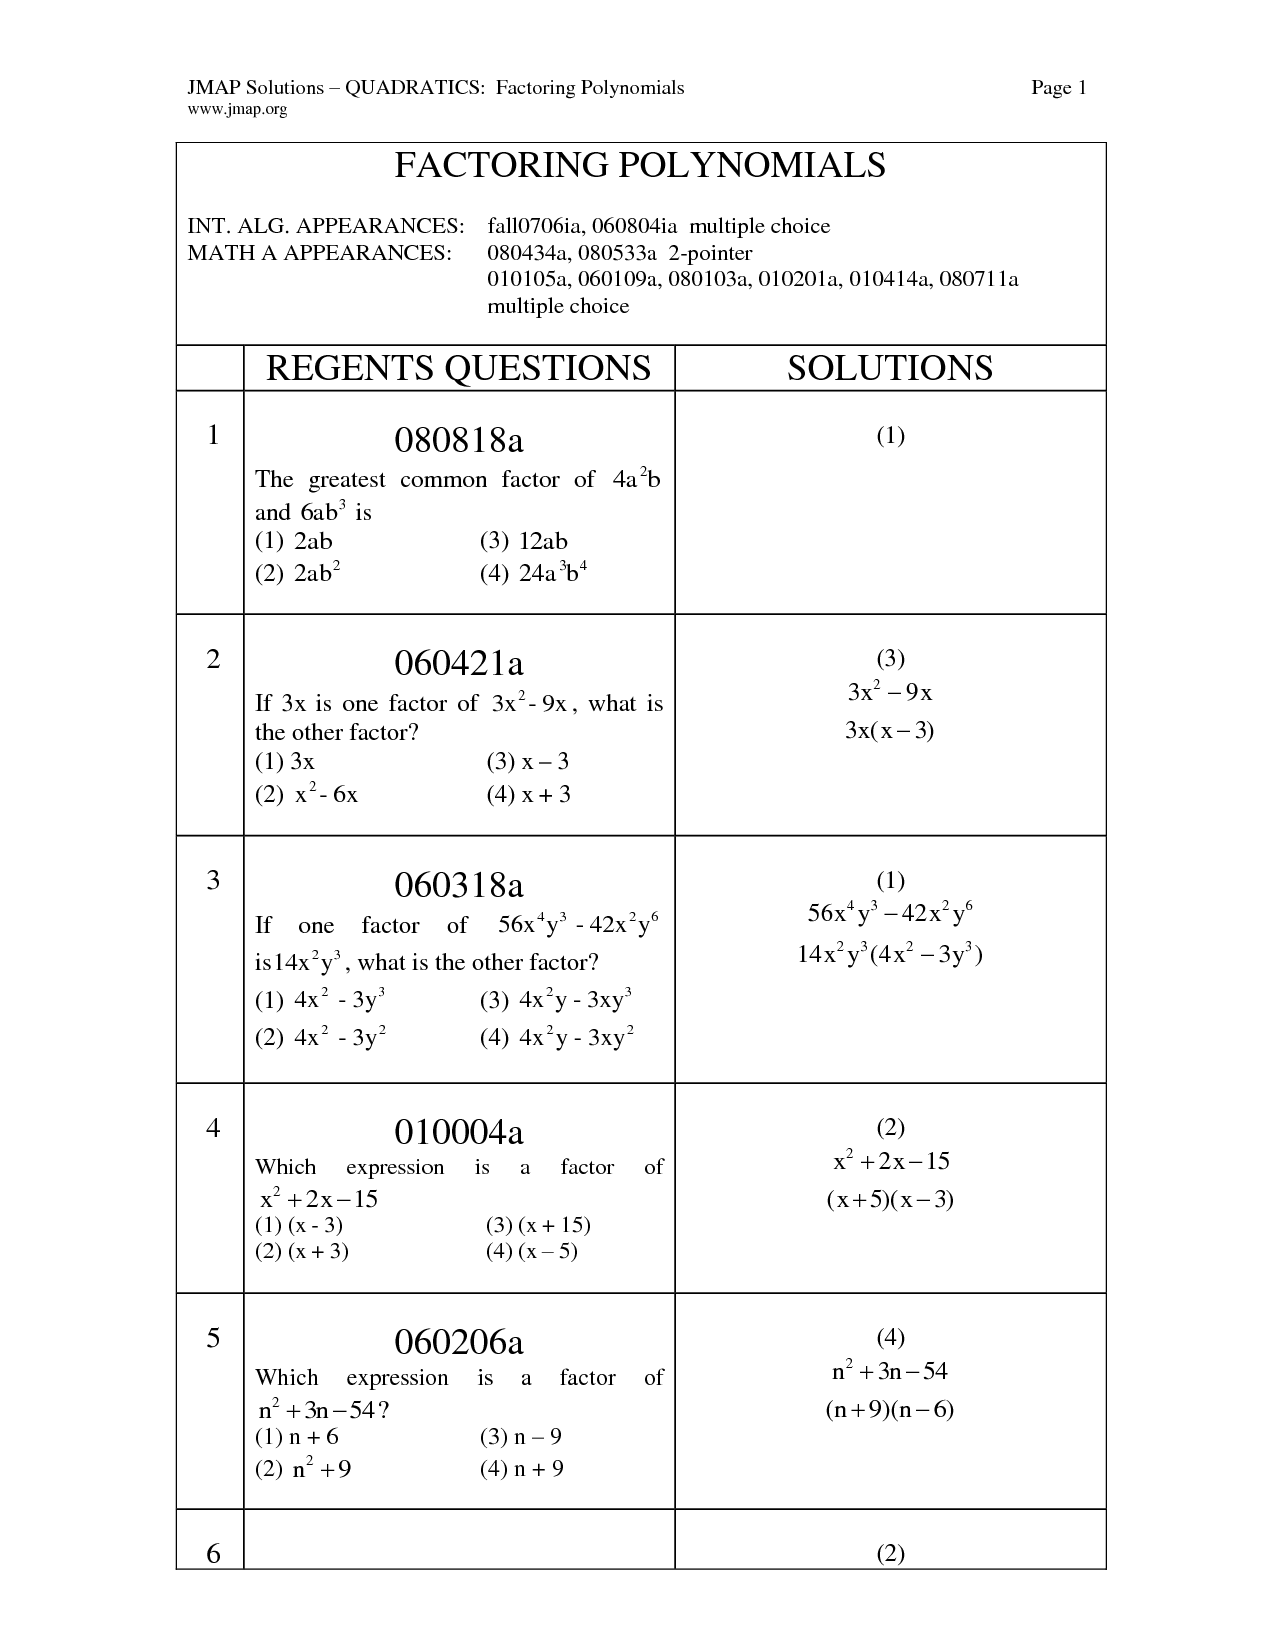 Factoring Quadratic Equations Worksheet Image